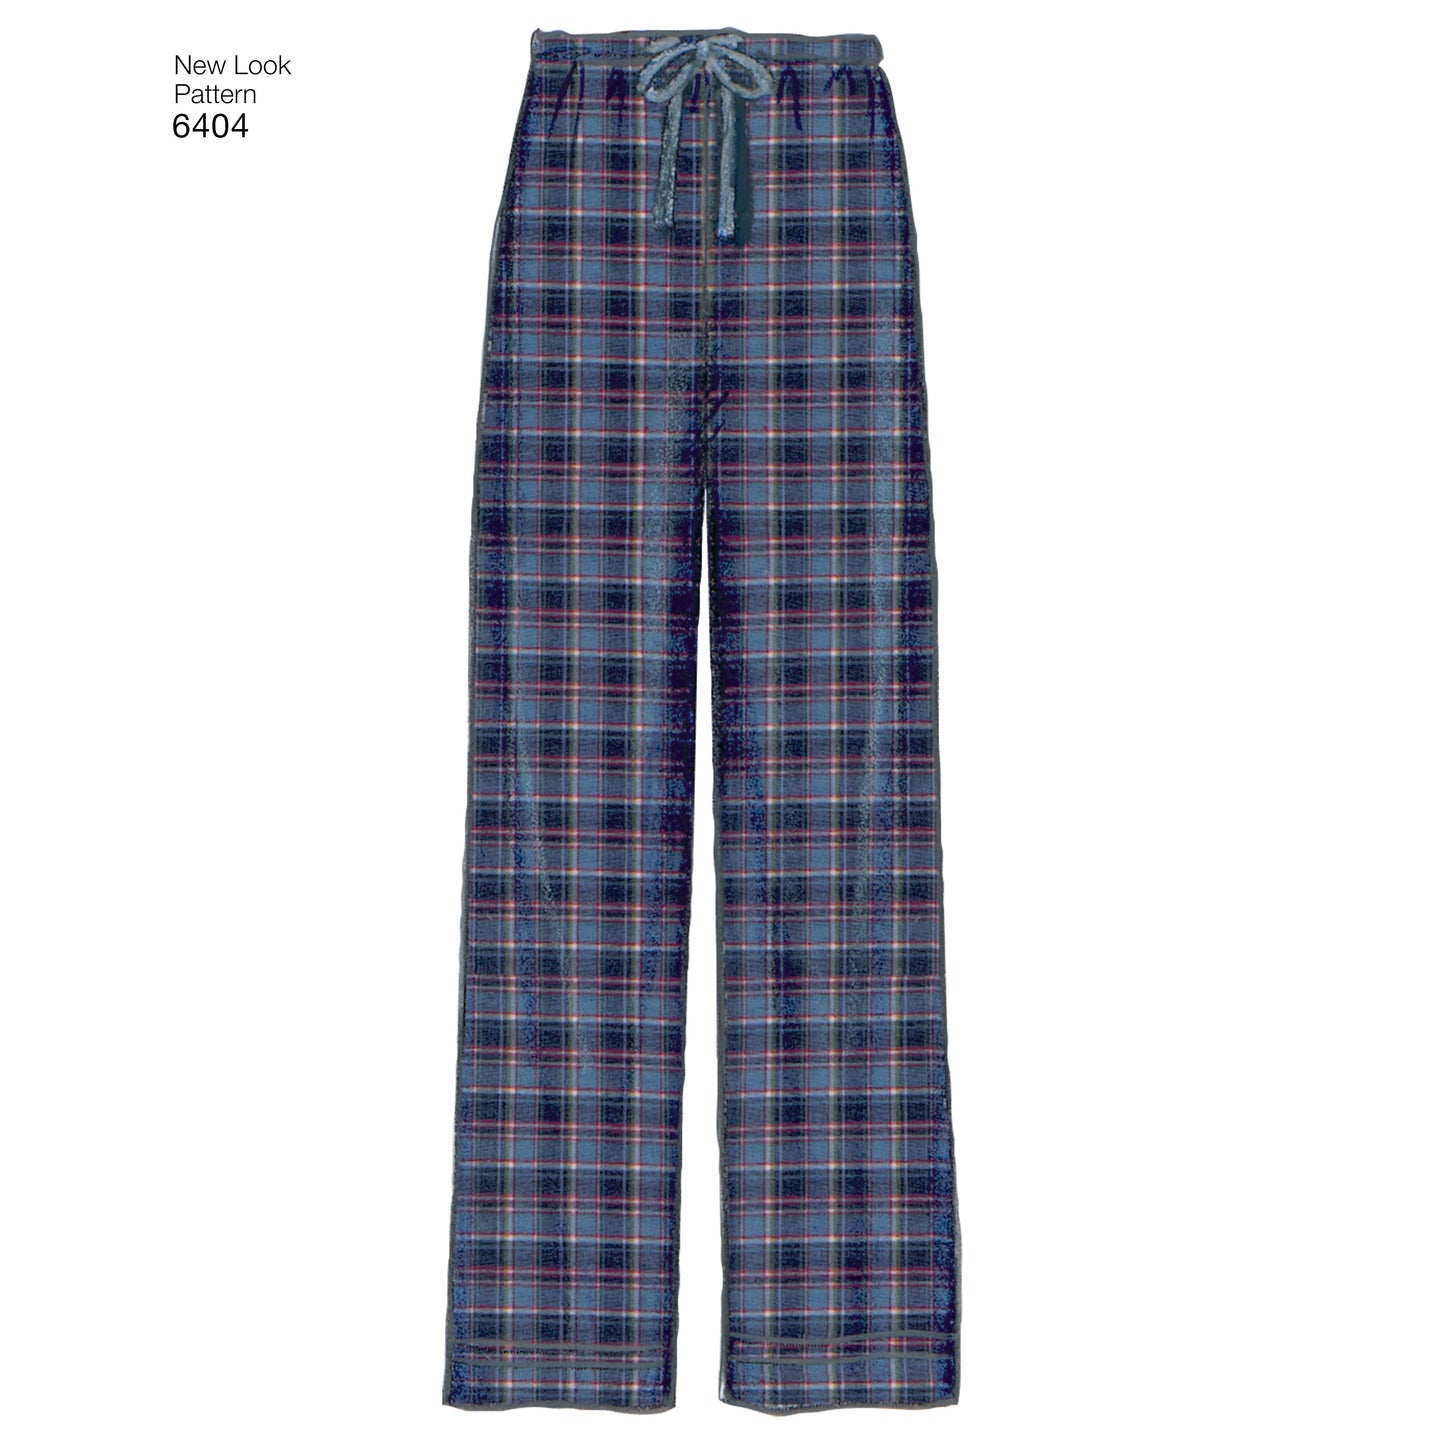 Symönster New Look 6404 - Top Byxa Skjorta Pyjamas - Dam Herr | Bild 6